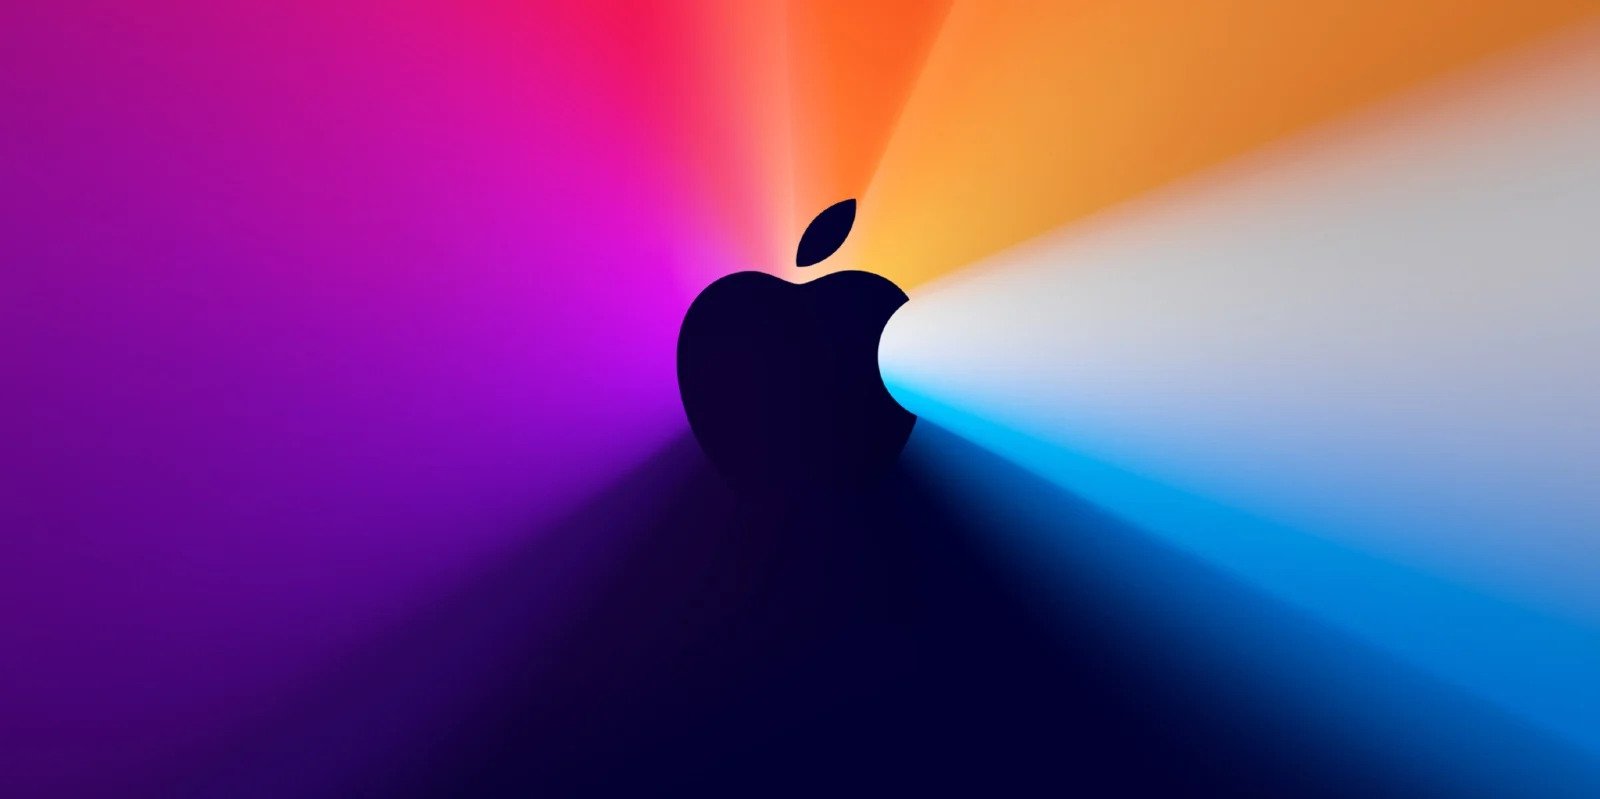 apple watch macs zero-day vulnerability explot